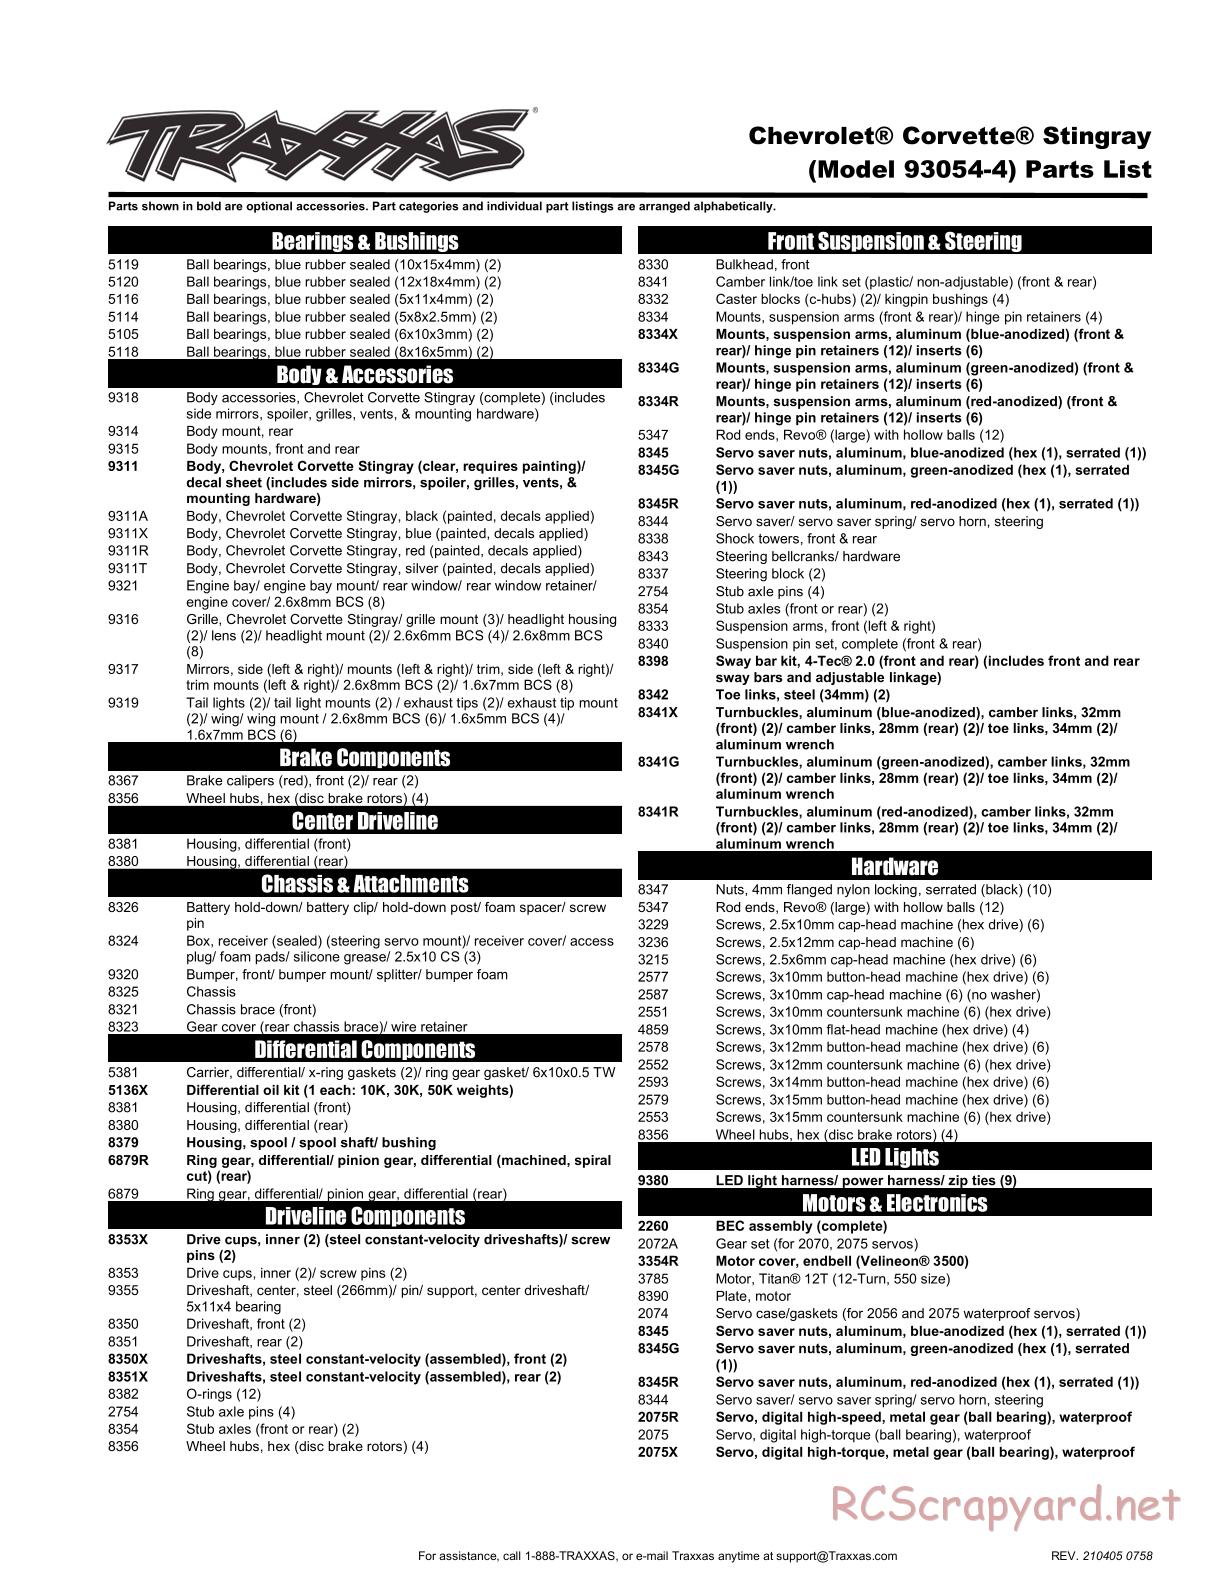 Traxxas - Corvette Stingray - Parts List - Page 1